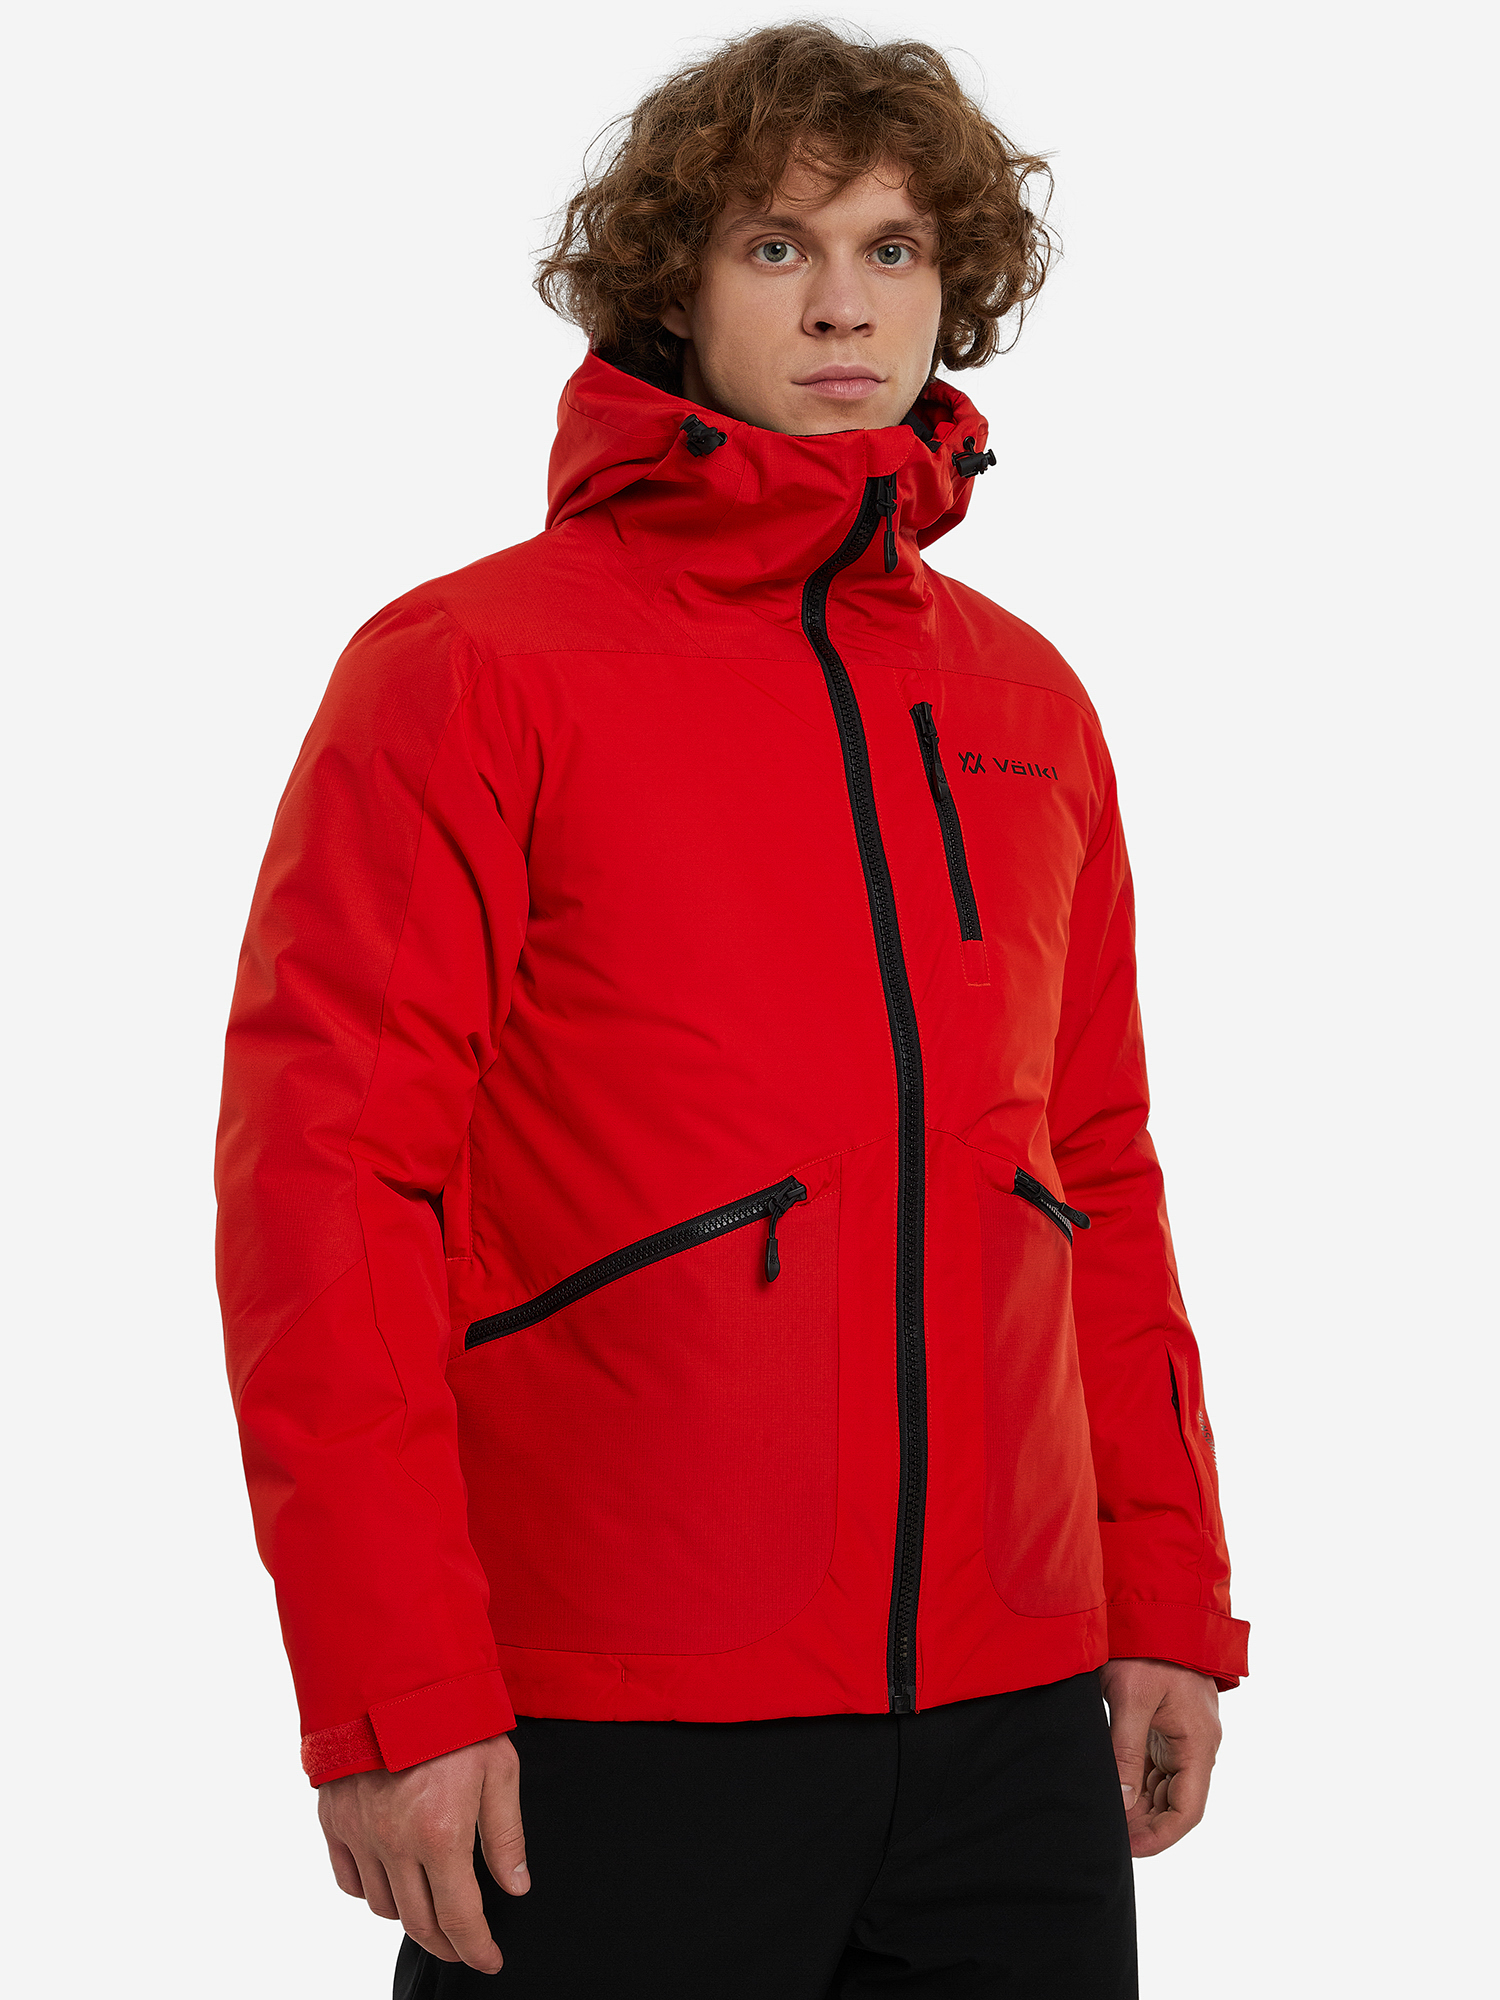 Куртка утепленная мужская Volkl, Красный футболка мужская gsd красный